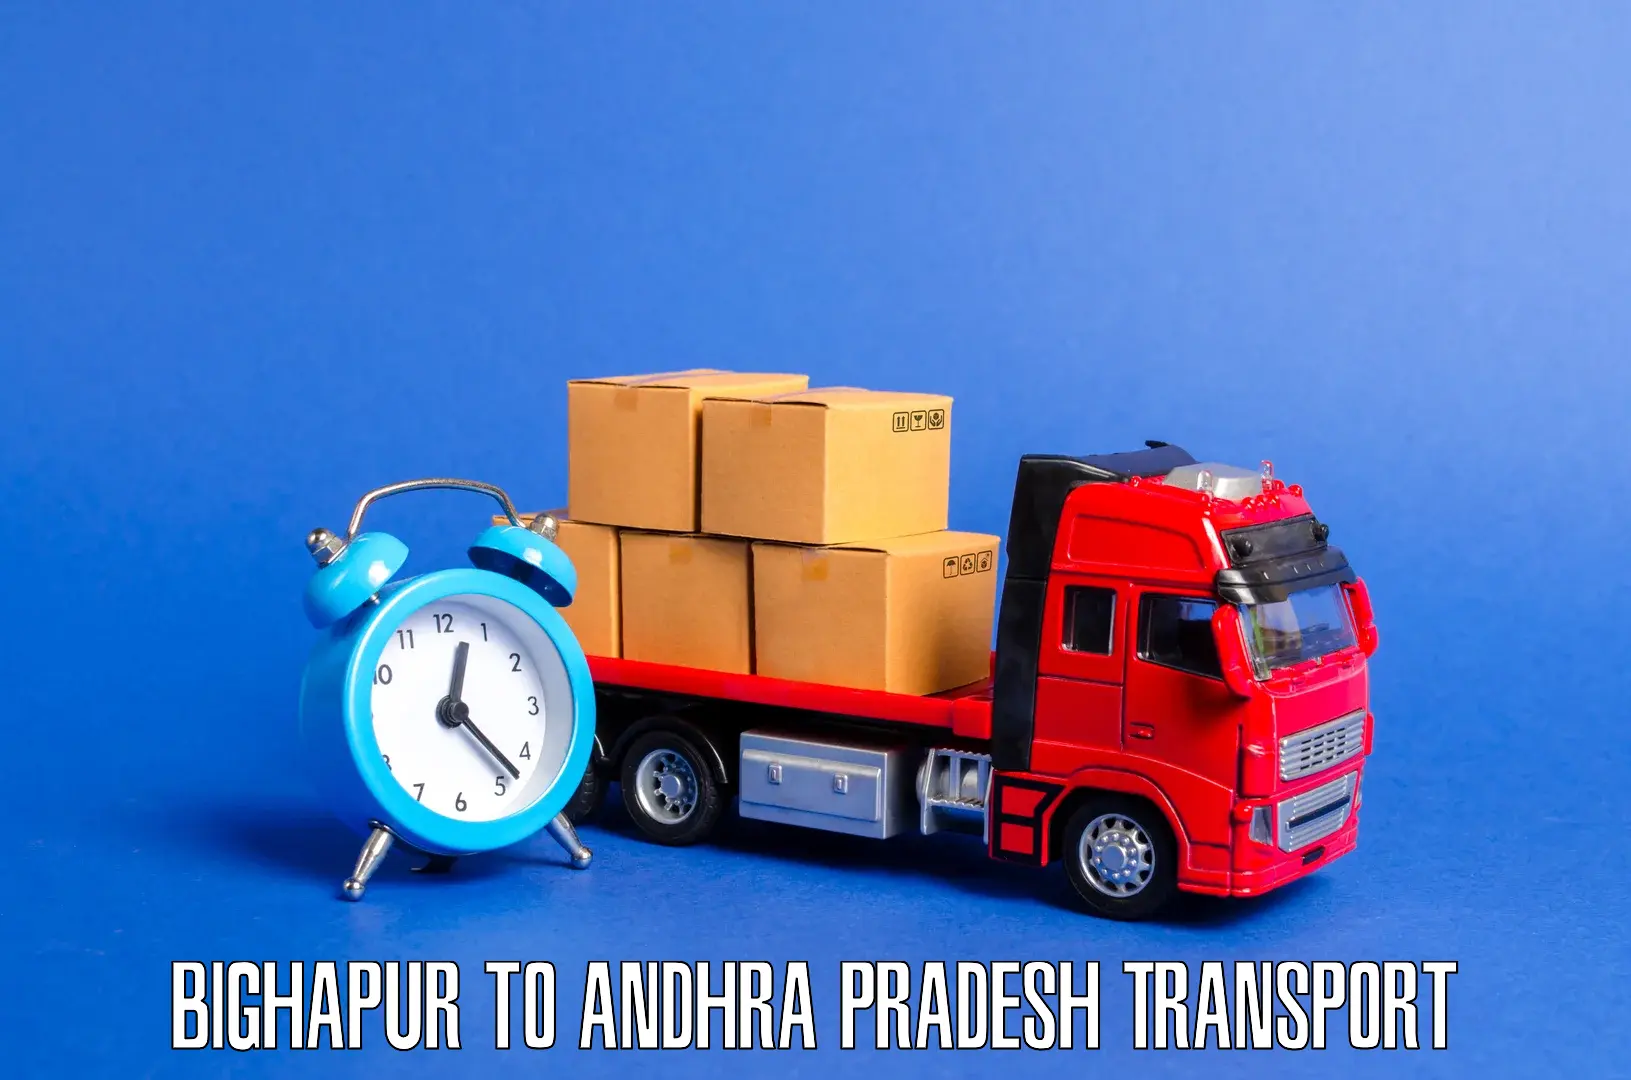 Cargo train transport services Bighapur to Visakhapatnam Port